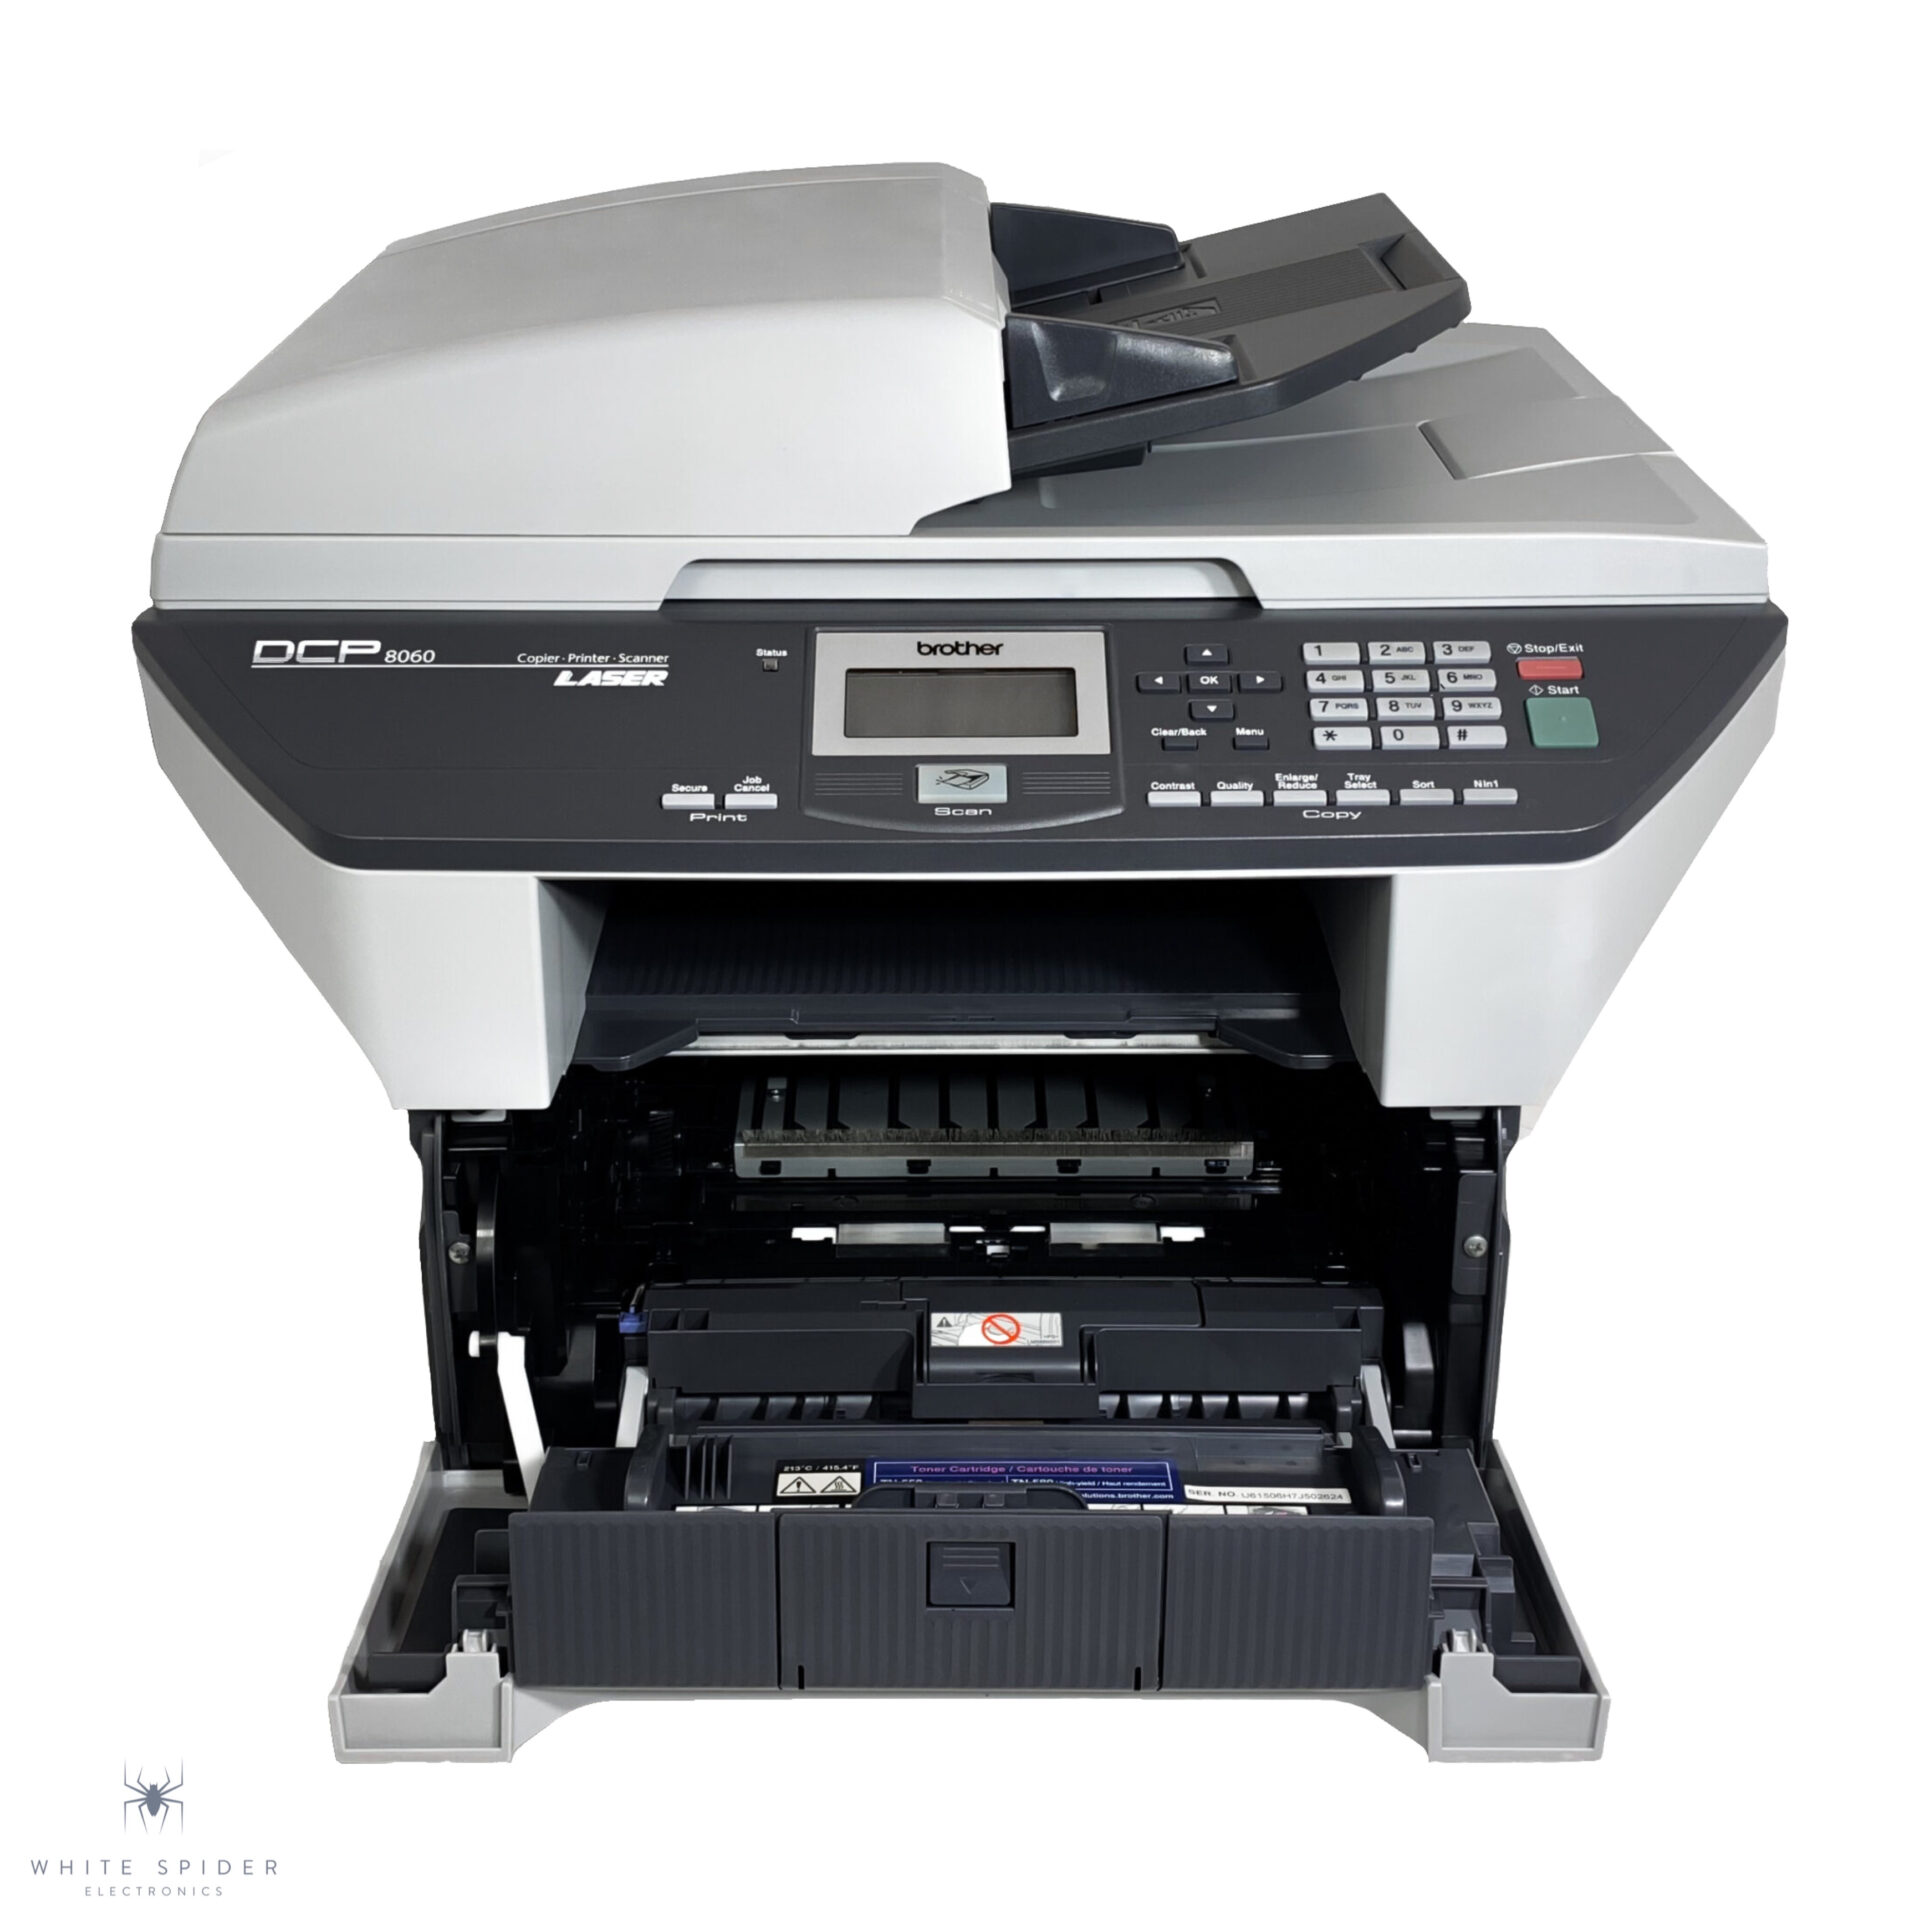 escribir Especificado Gran cantidad de Brother DCP-8060 All-In-One Laser Printer - White Spider Electronics